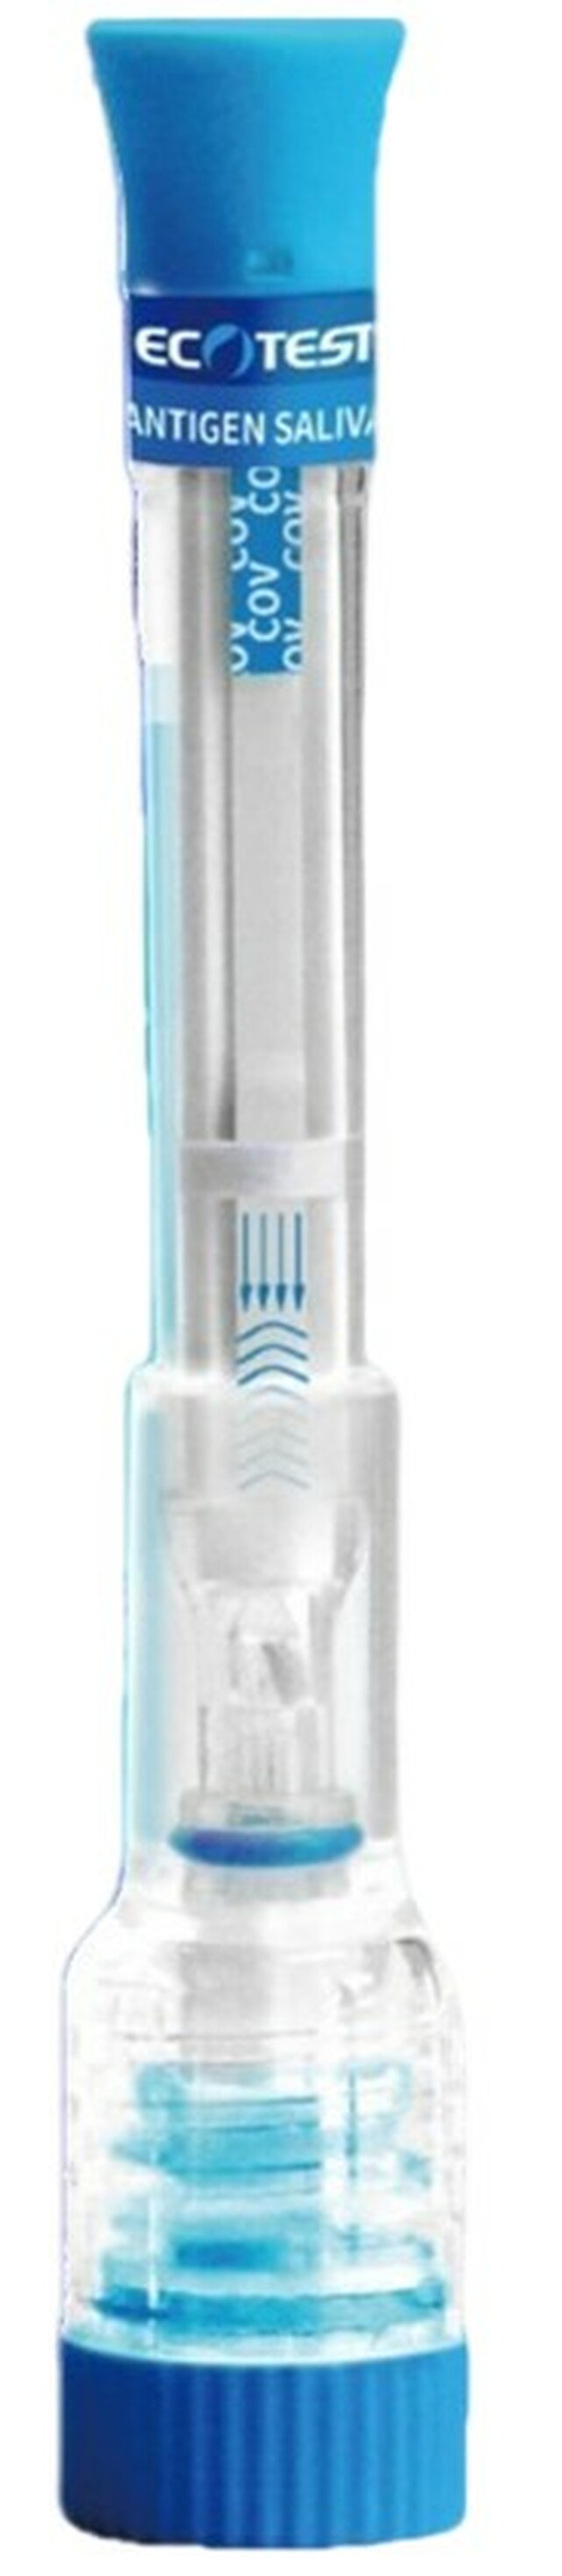 Ecotest COVID-19 Rapid Antigen Saliva Test Pen Device